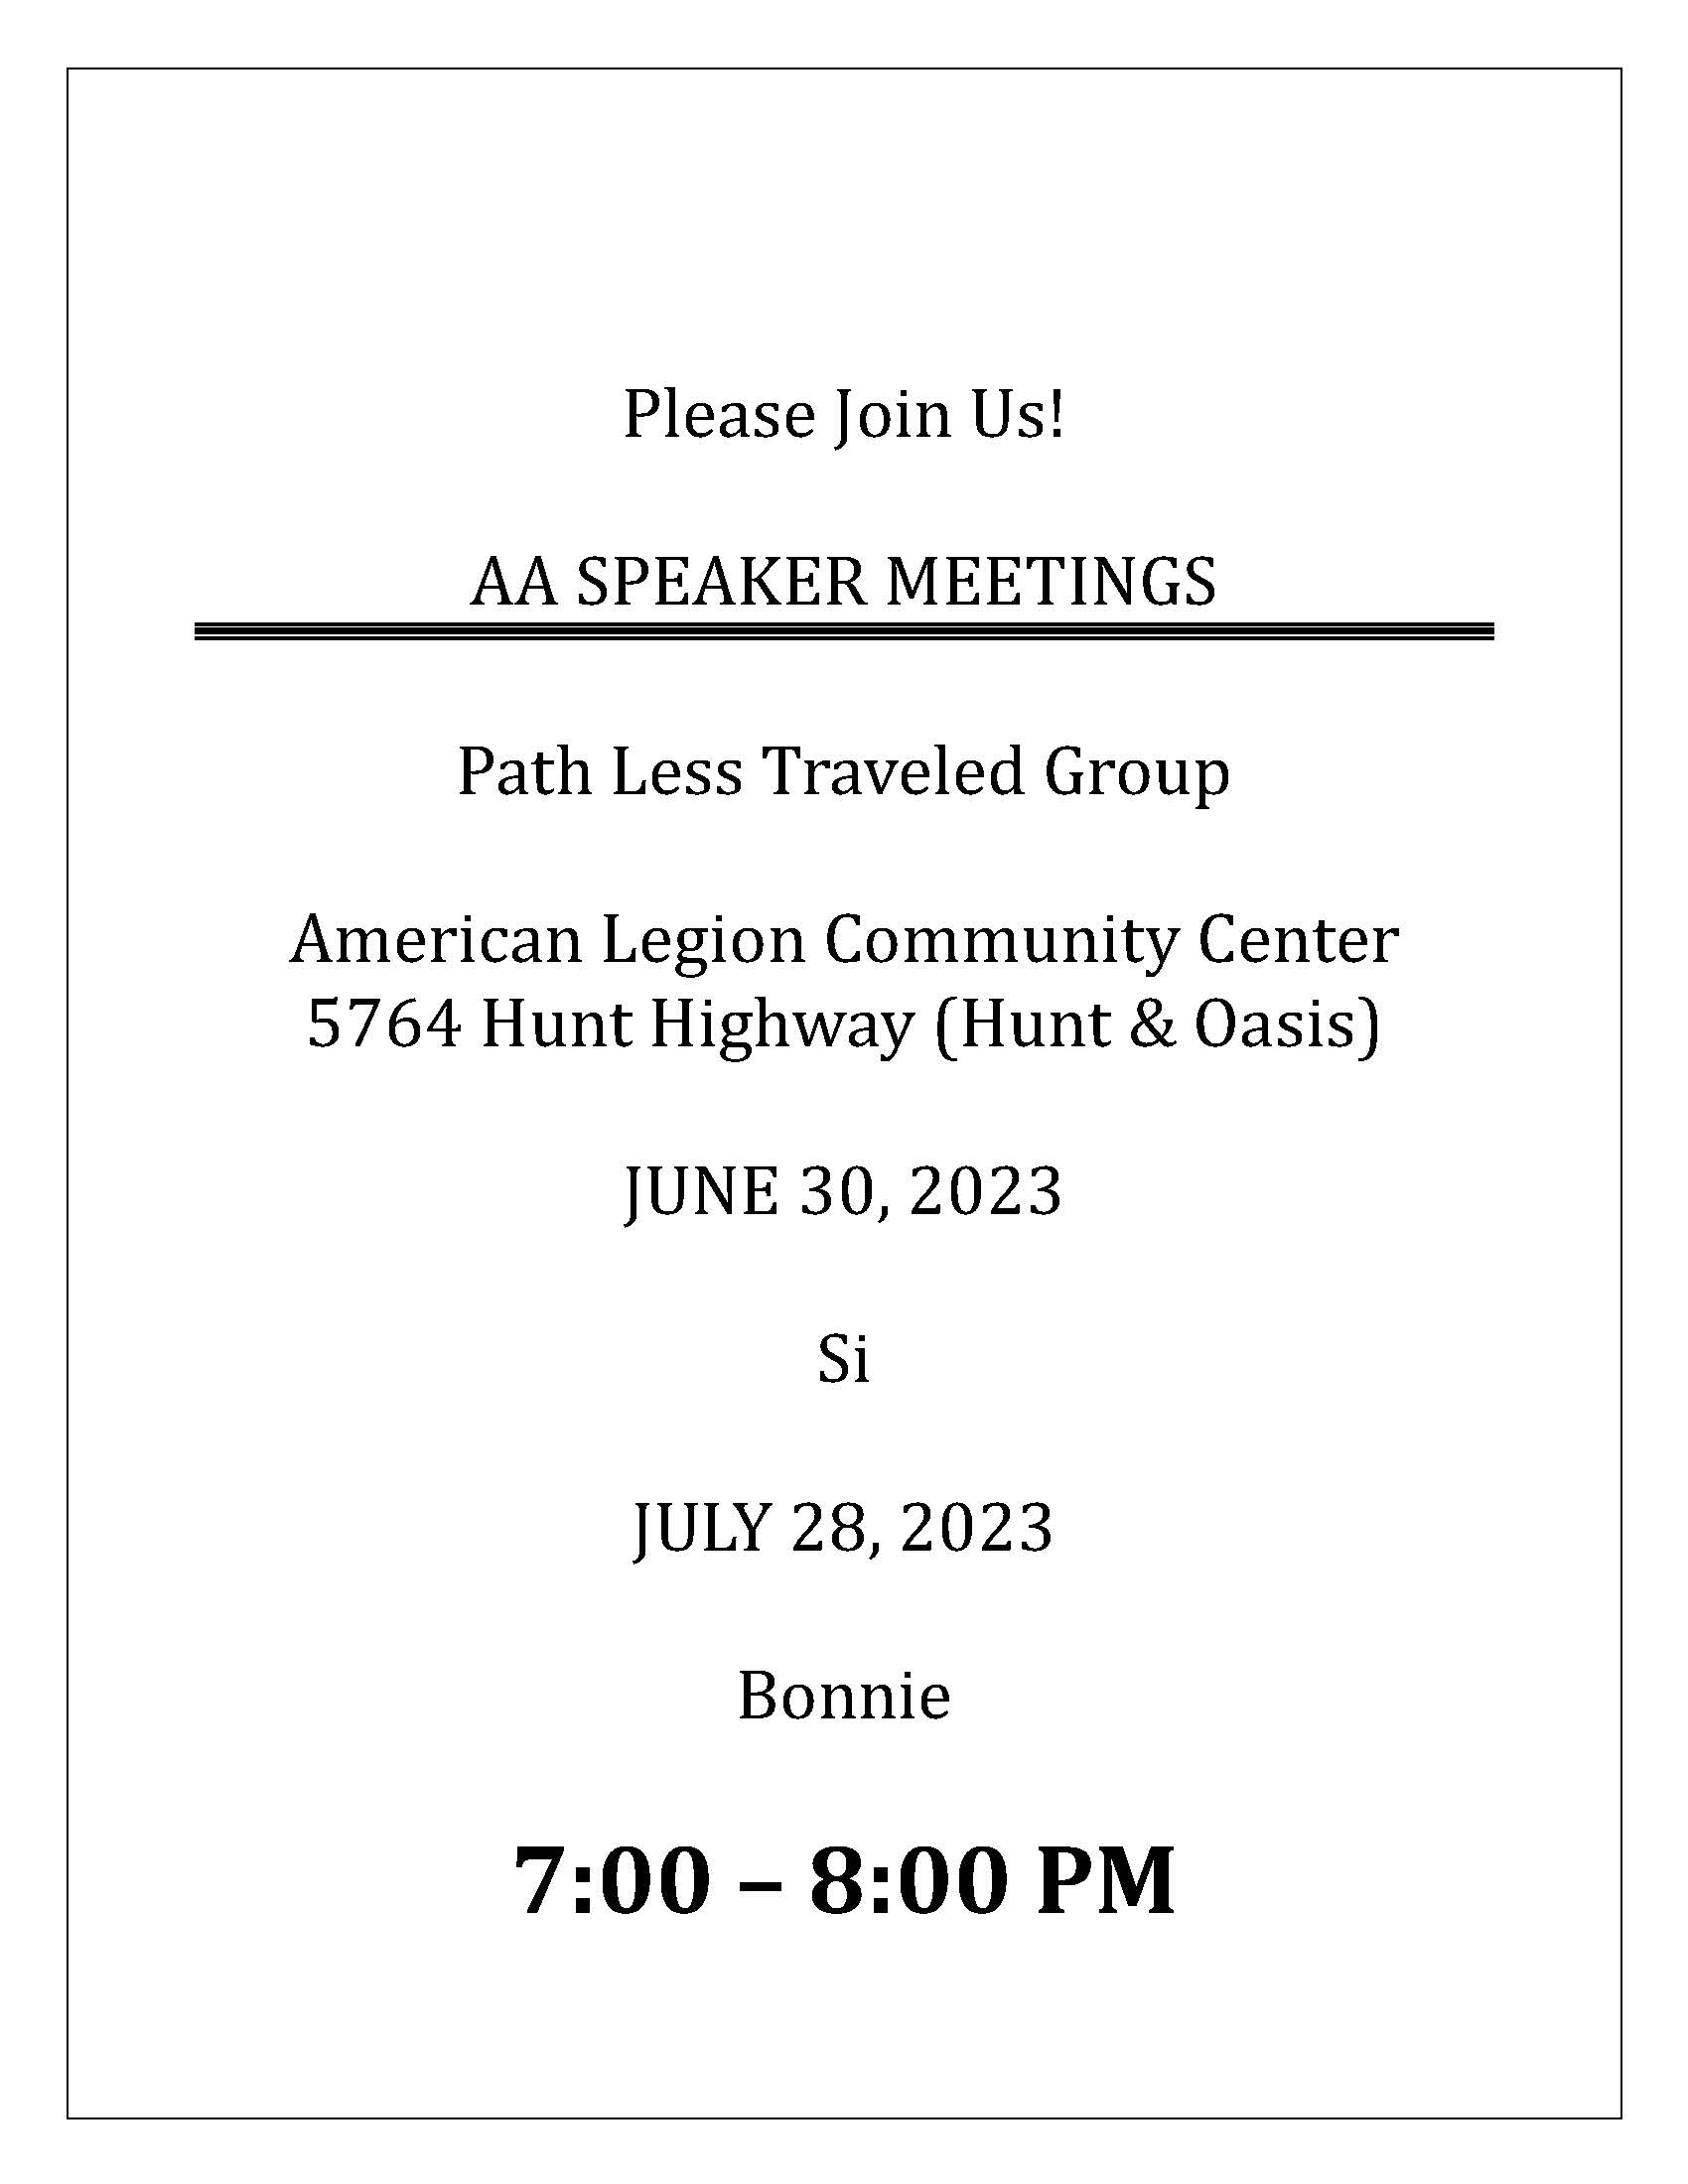 Path Less Traveled Group Speaker Meeting